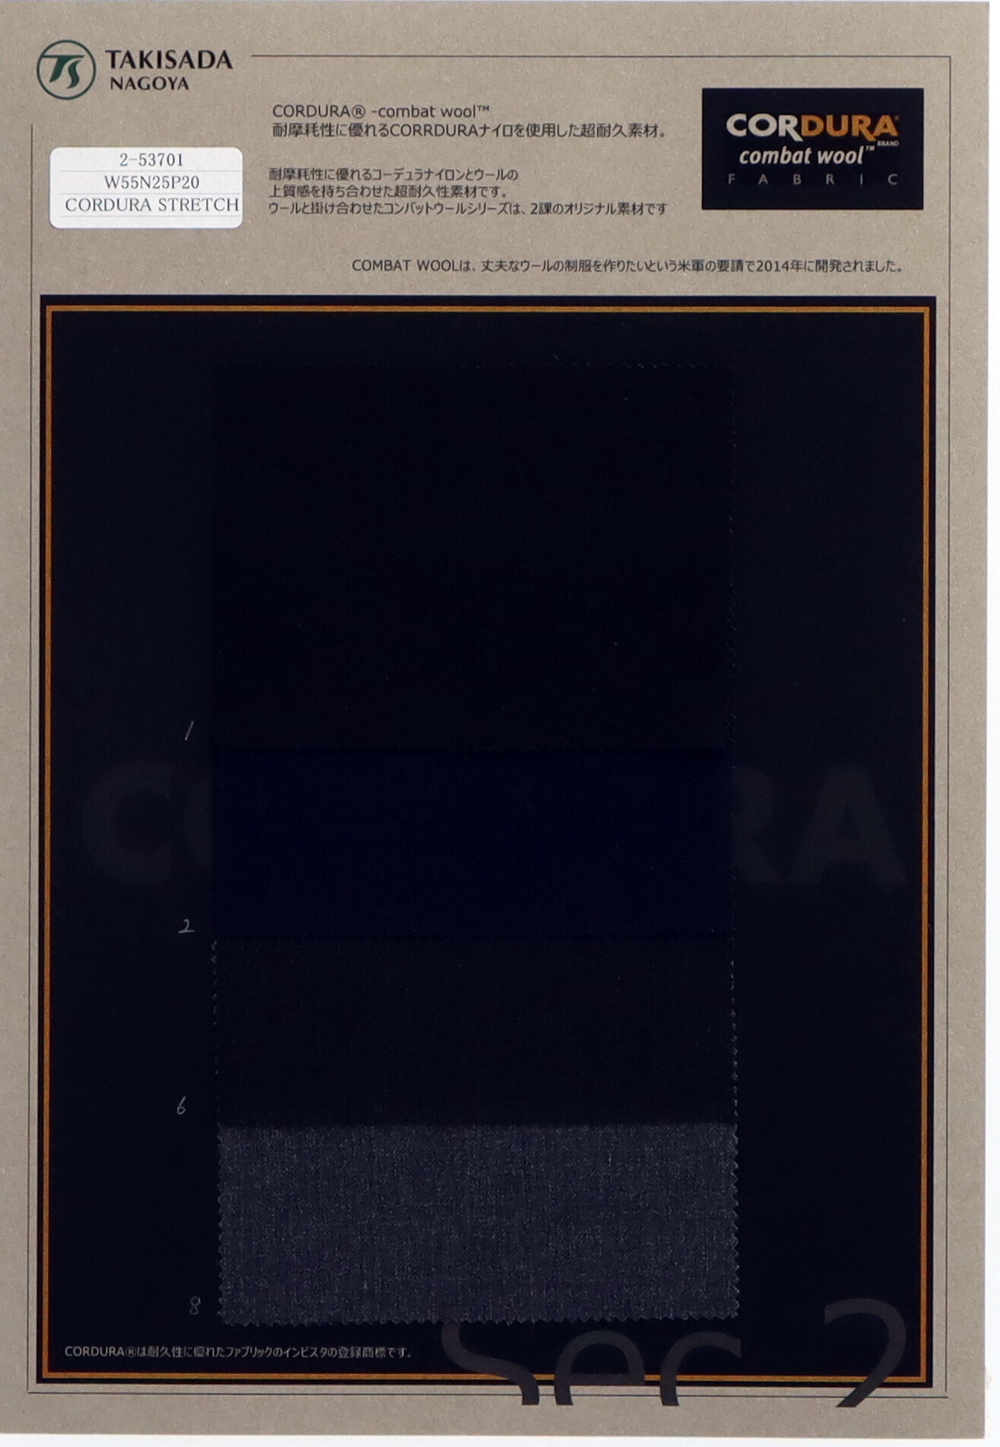 2-53701 CORDURA COMBATWOOL Stretch Gabardine[Textile / Fabric] Takisada Nagoya